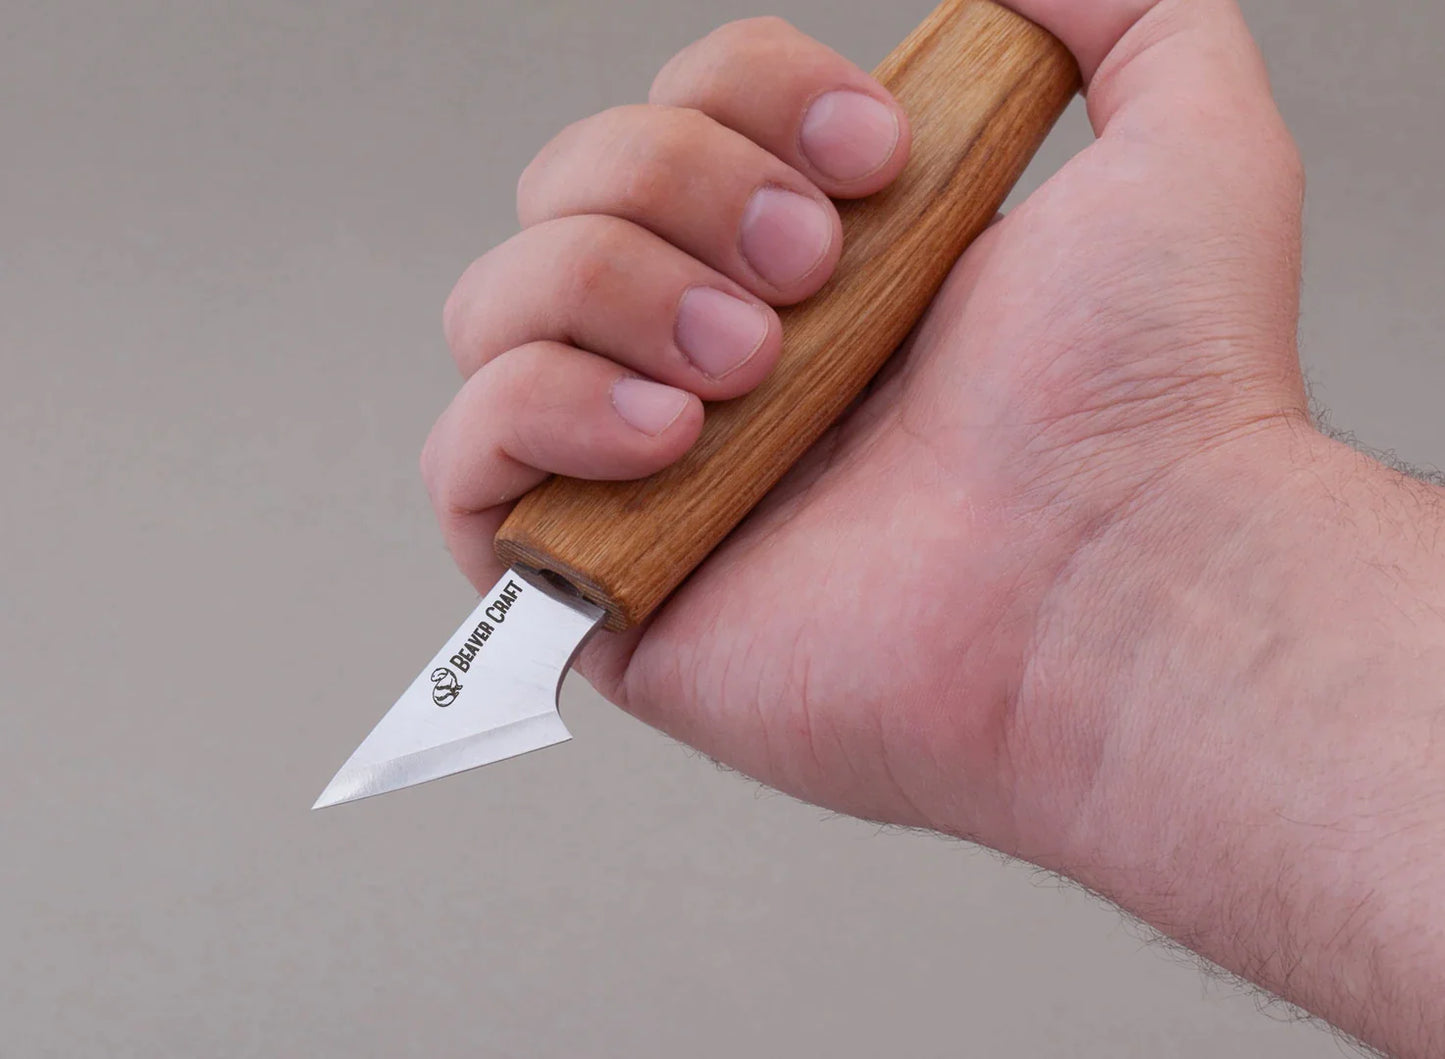 BeaverCraft C11 - Knife for Chip Wood Carving